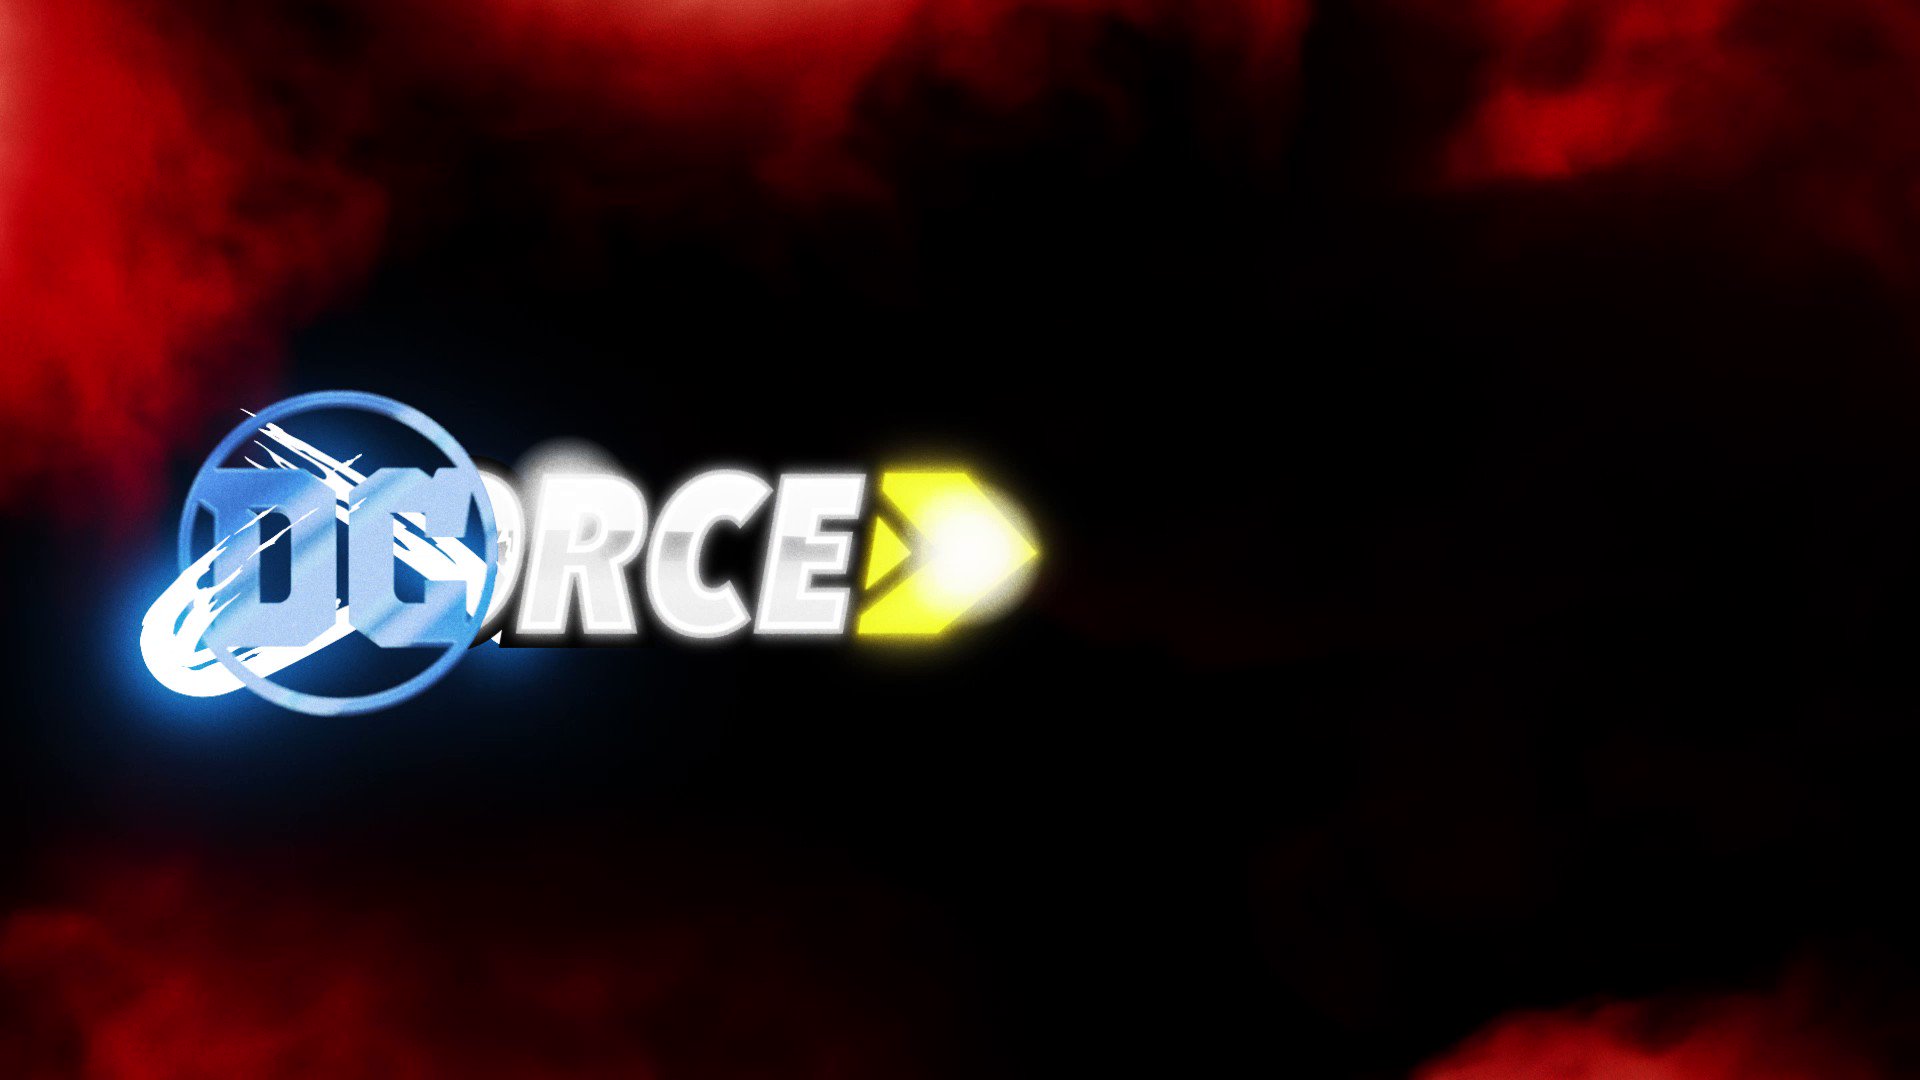 DualForce HQ - The Leading DC DualForce Fan Website